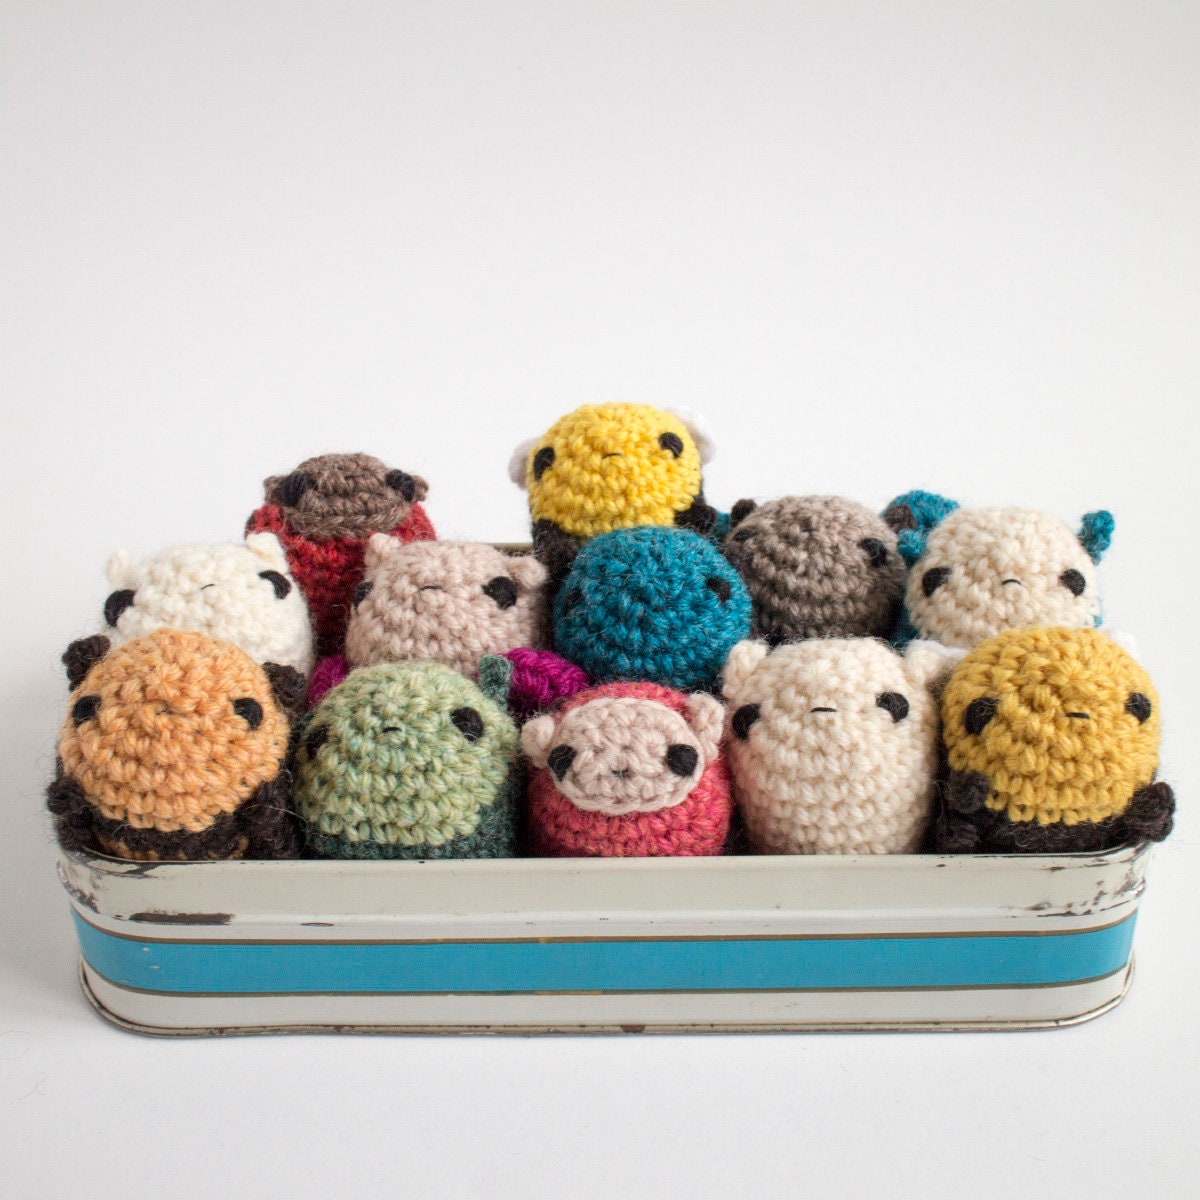 Mini Amigurumi Animals Crochet Book